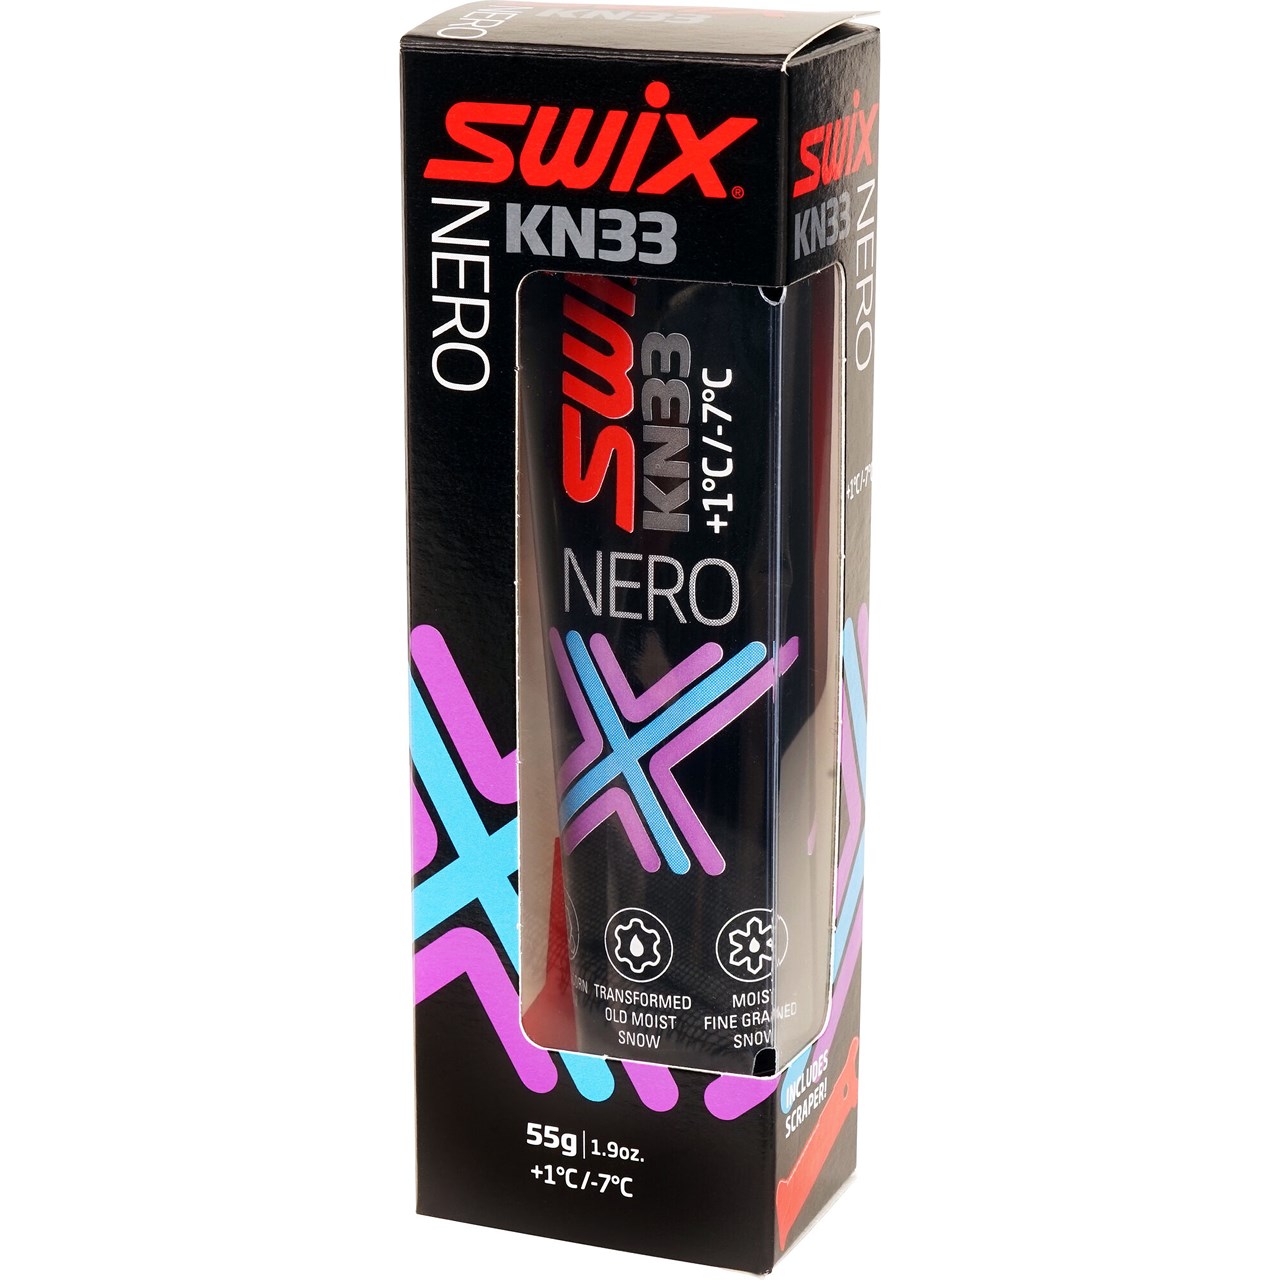 Swix  KN33 Nero, +1C to - 7C